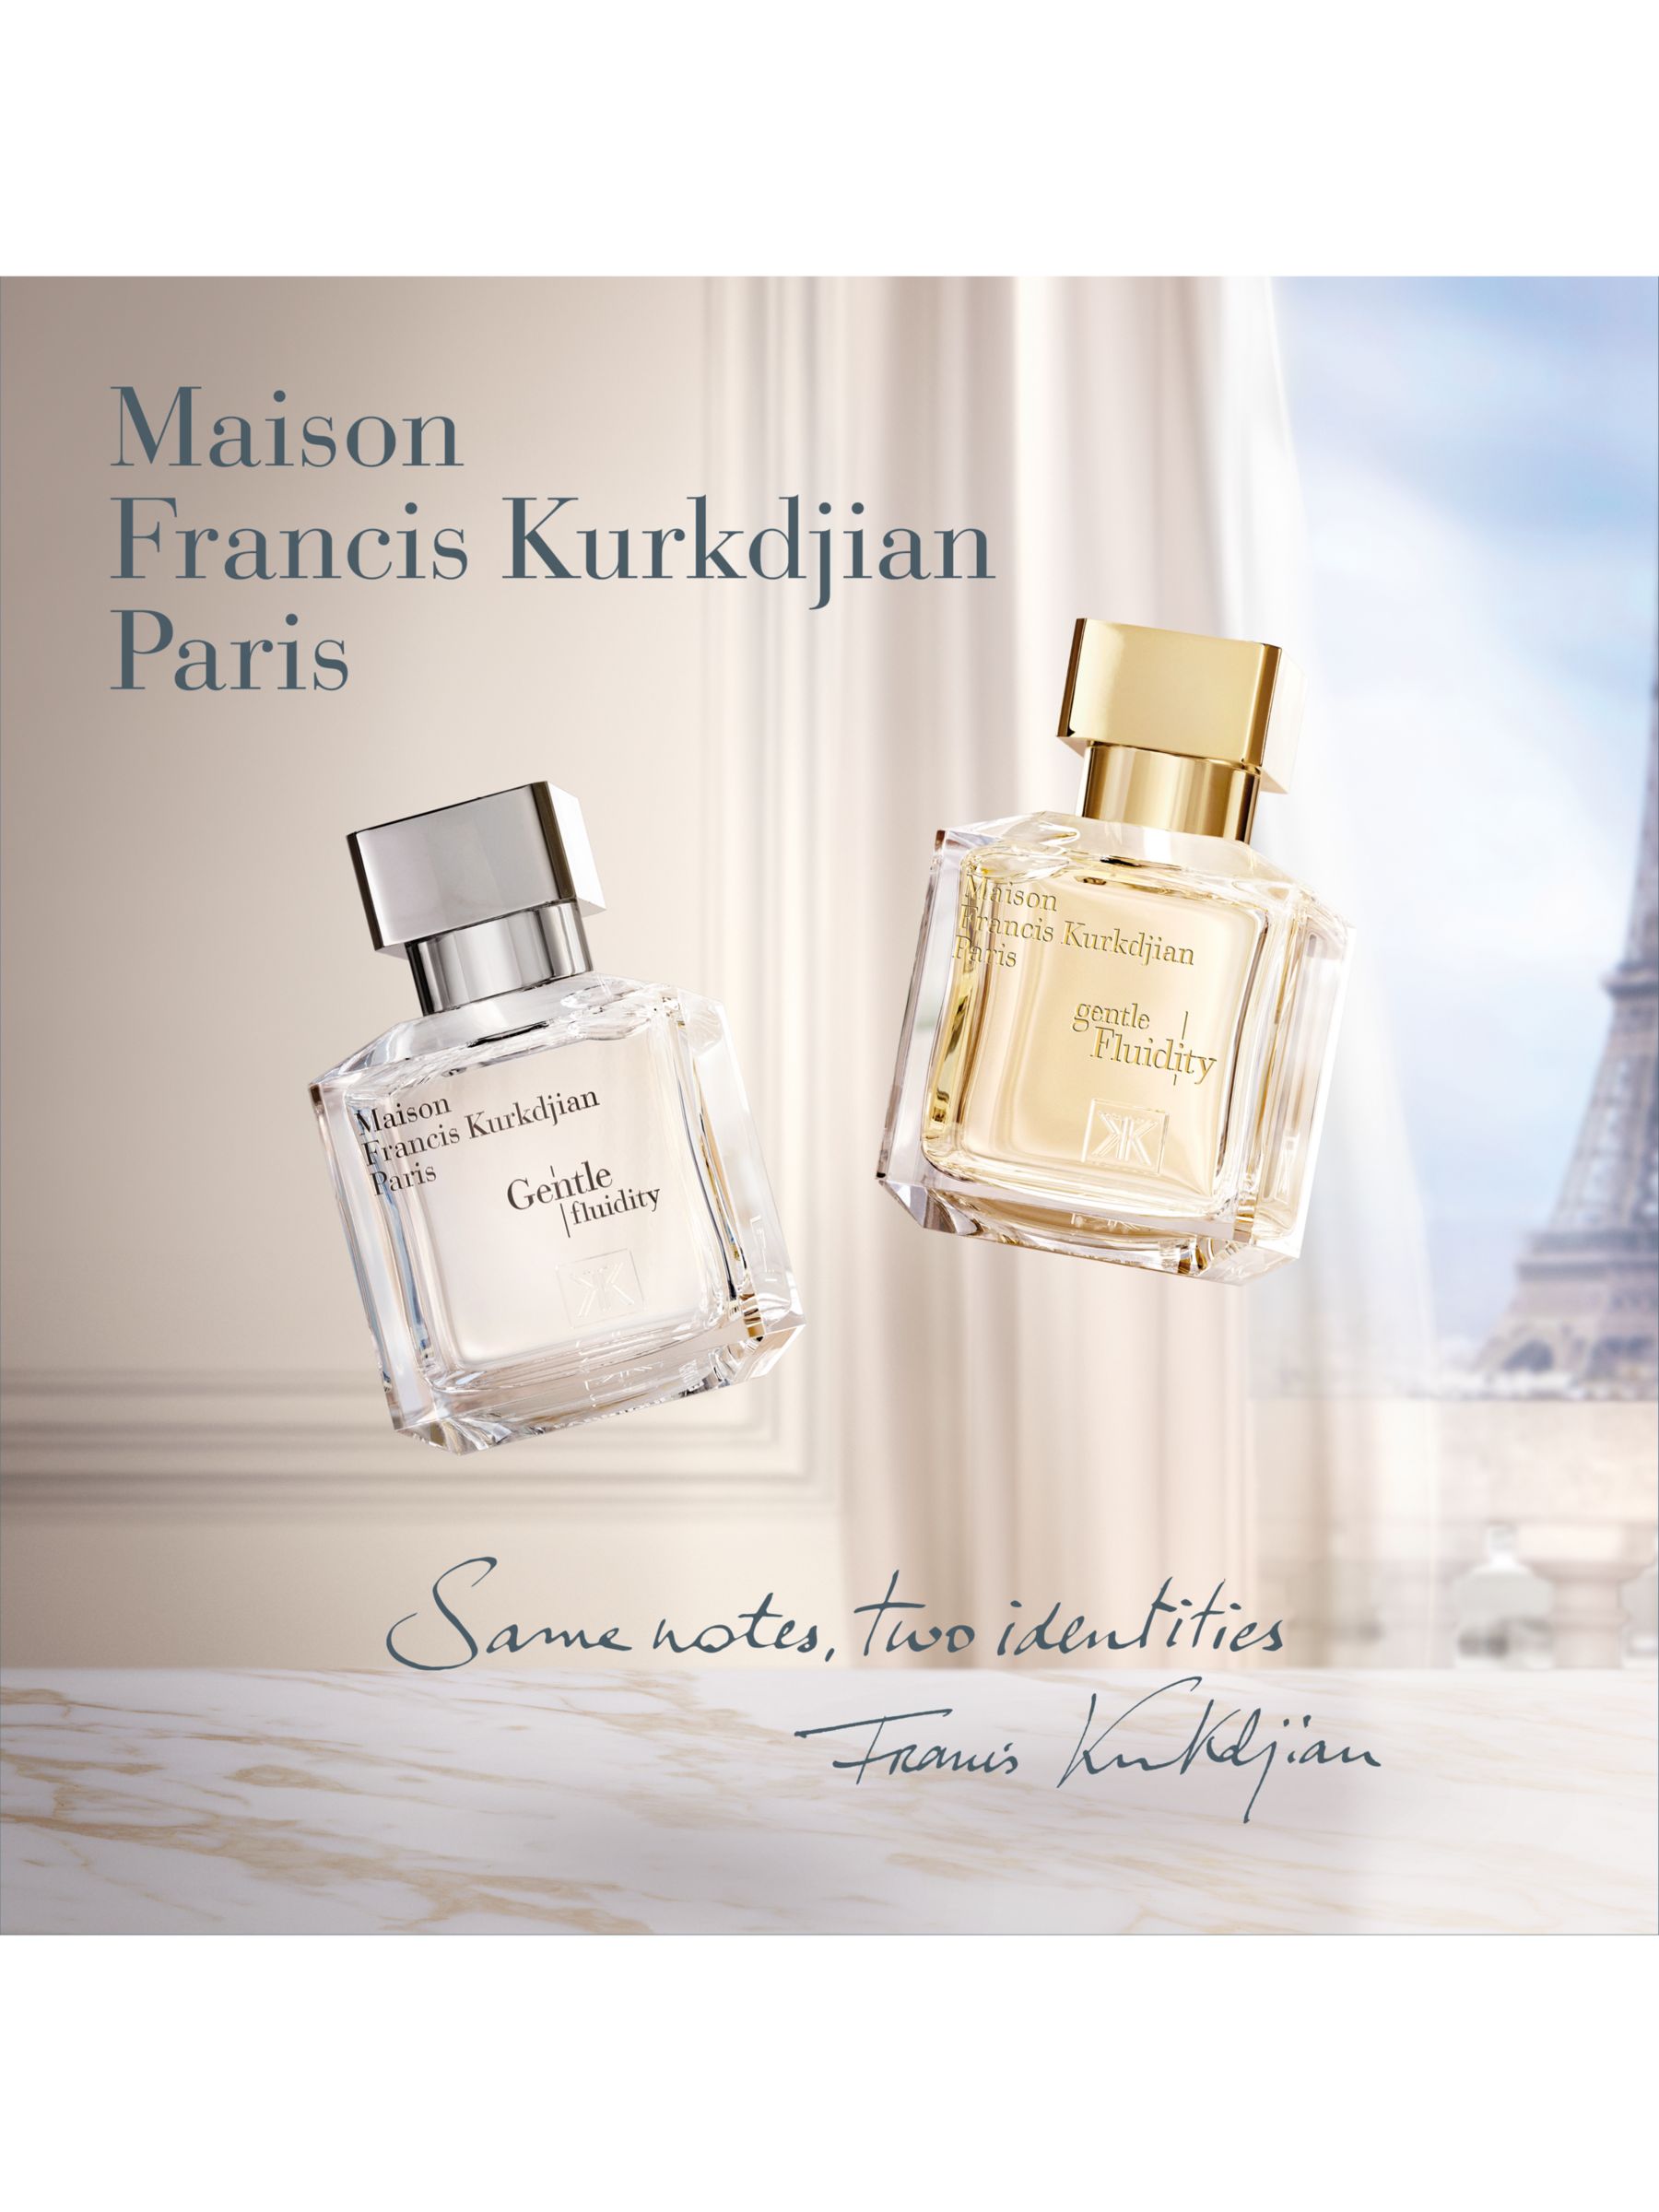 Maison francis kurkdjian gentle fluidity gold review